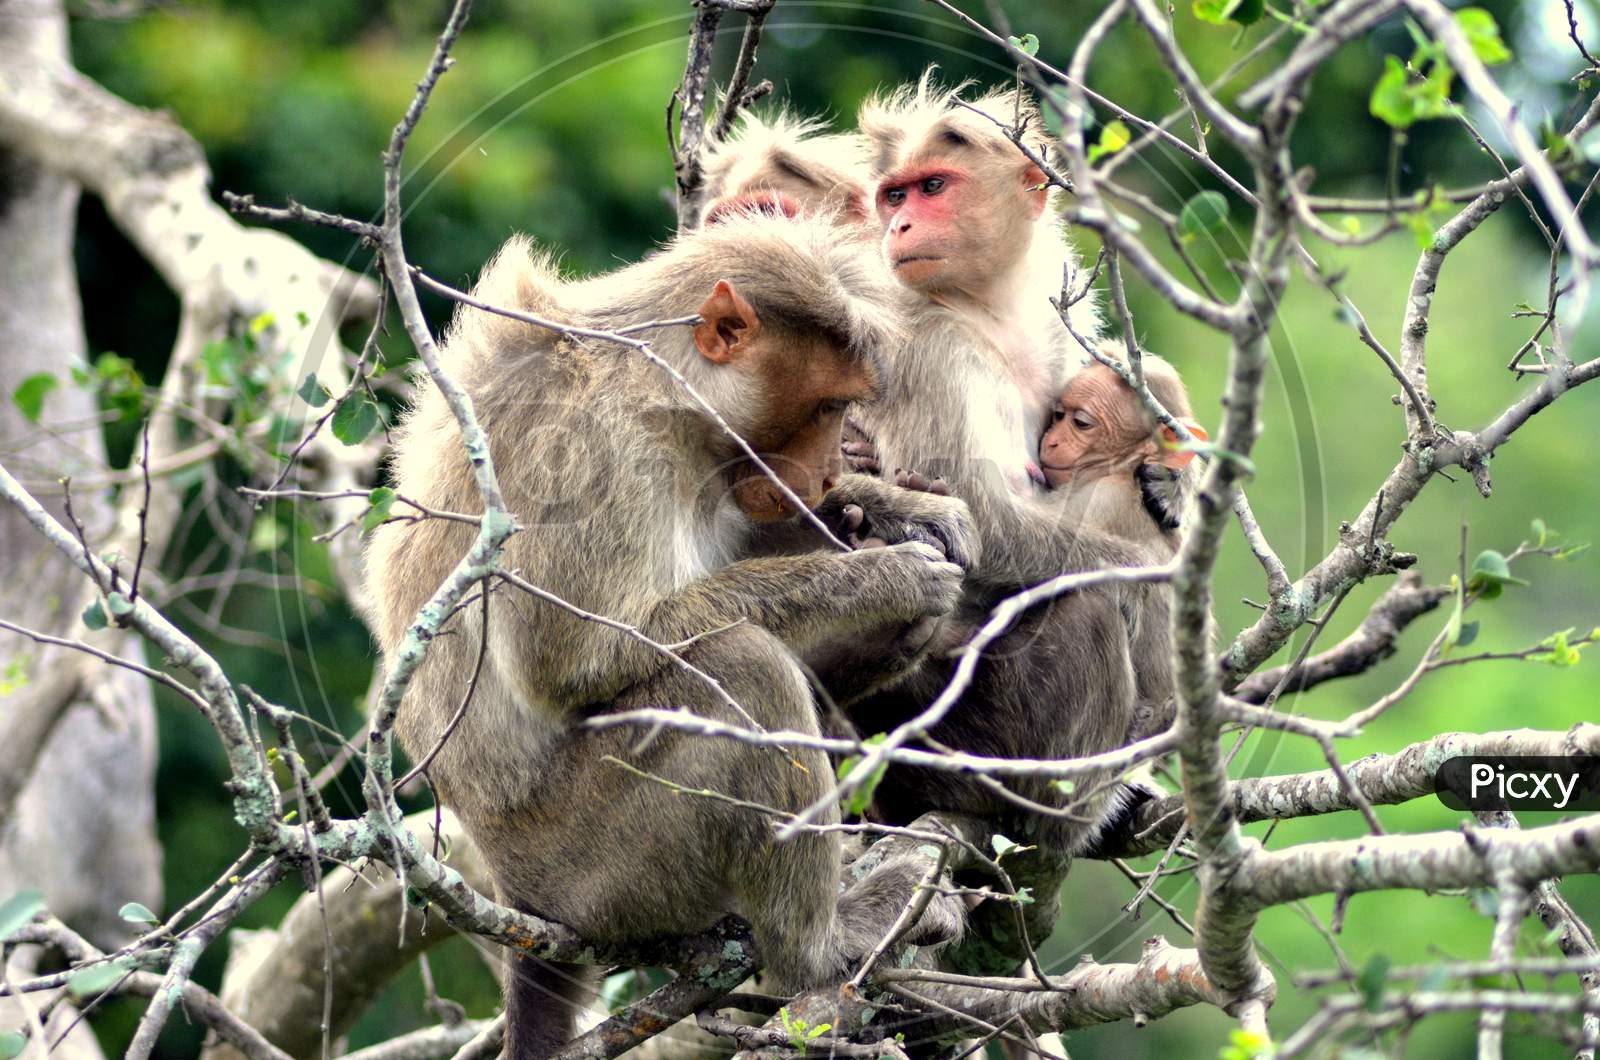 Monkey family in jungle